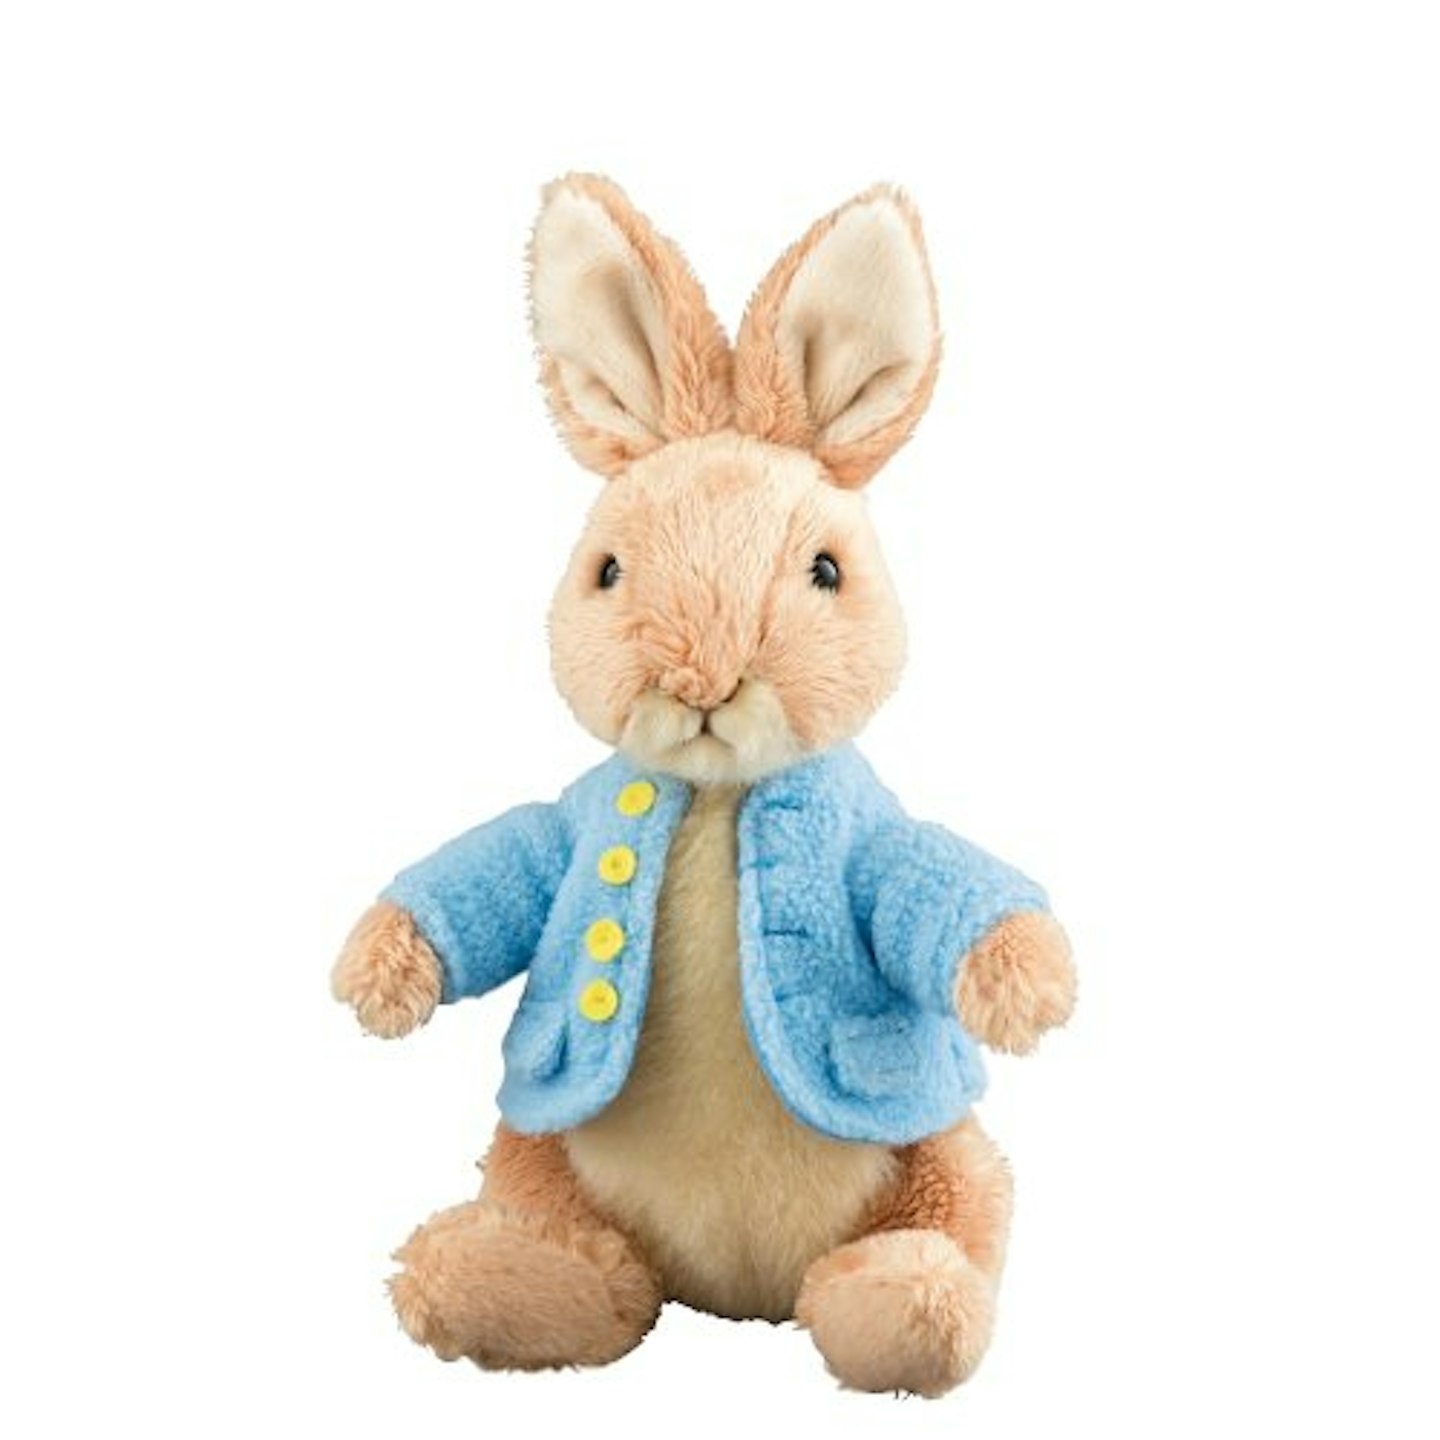 Peter Rabbit Plush Toy